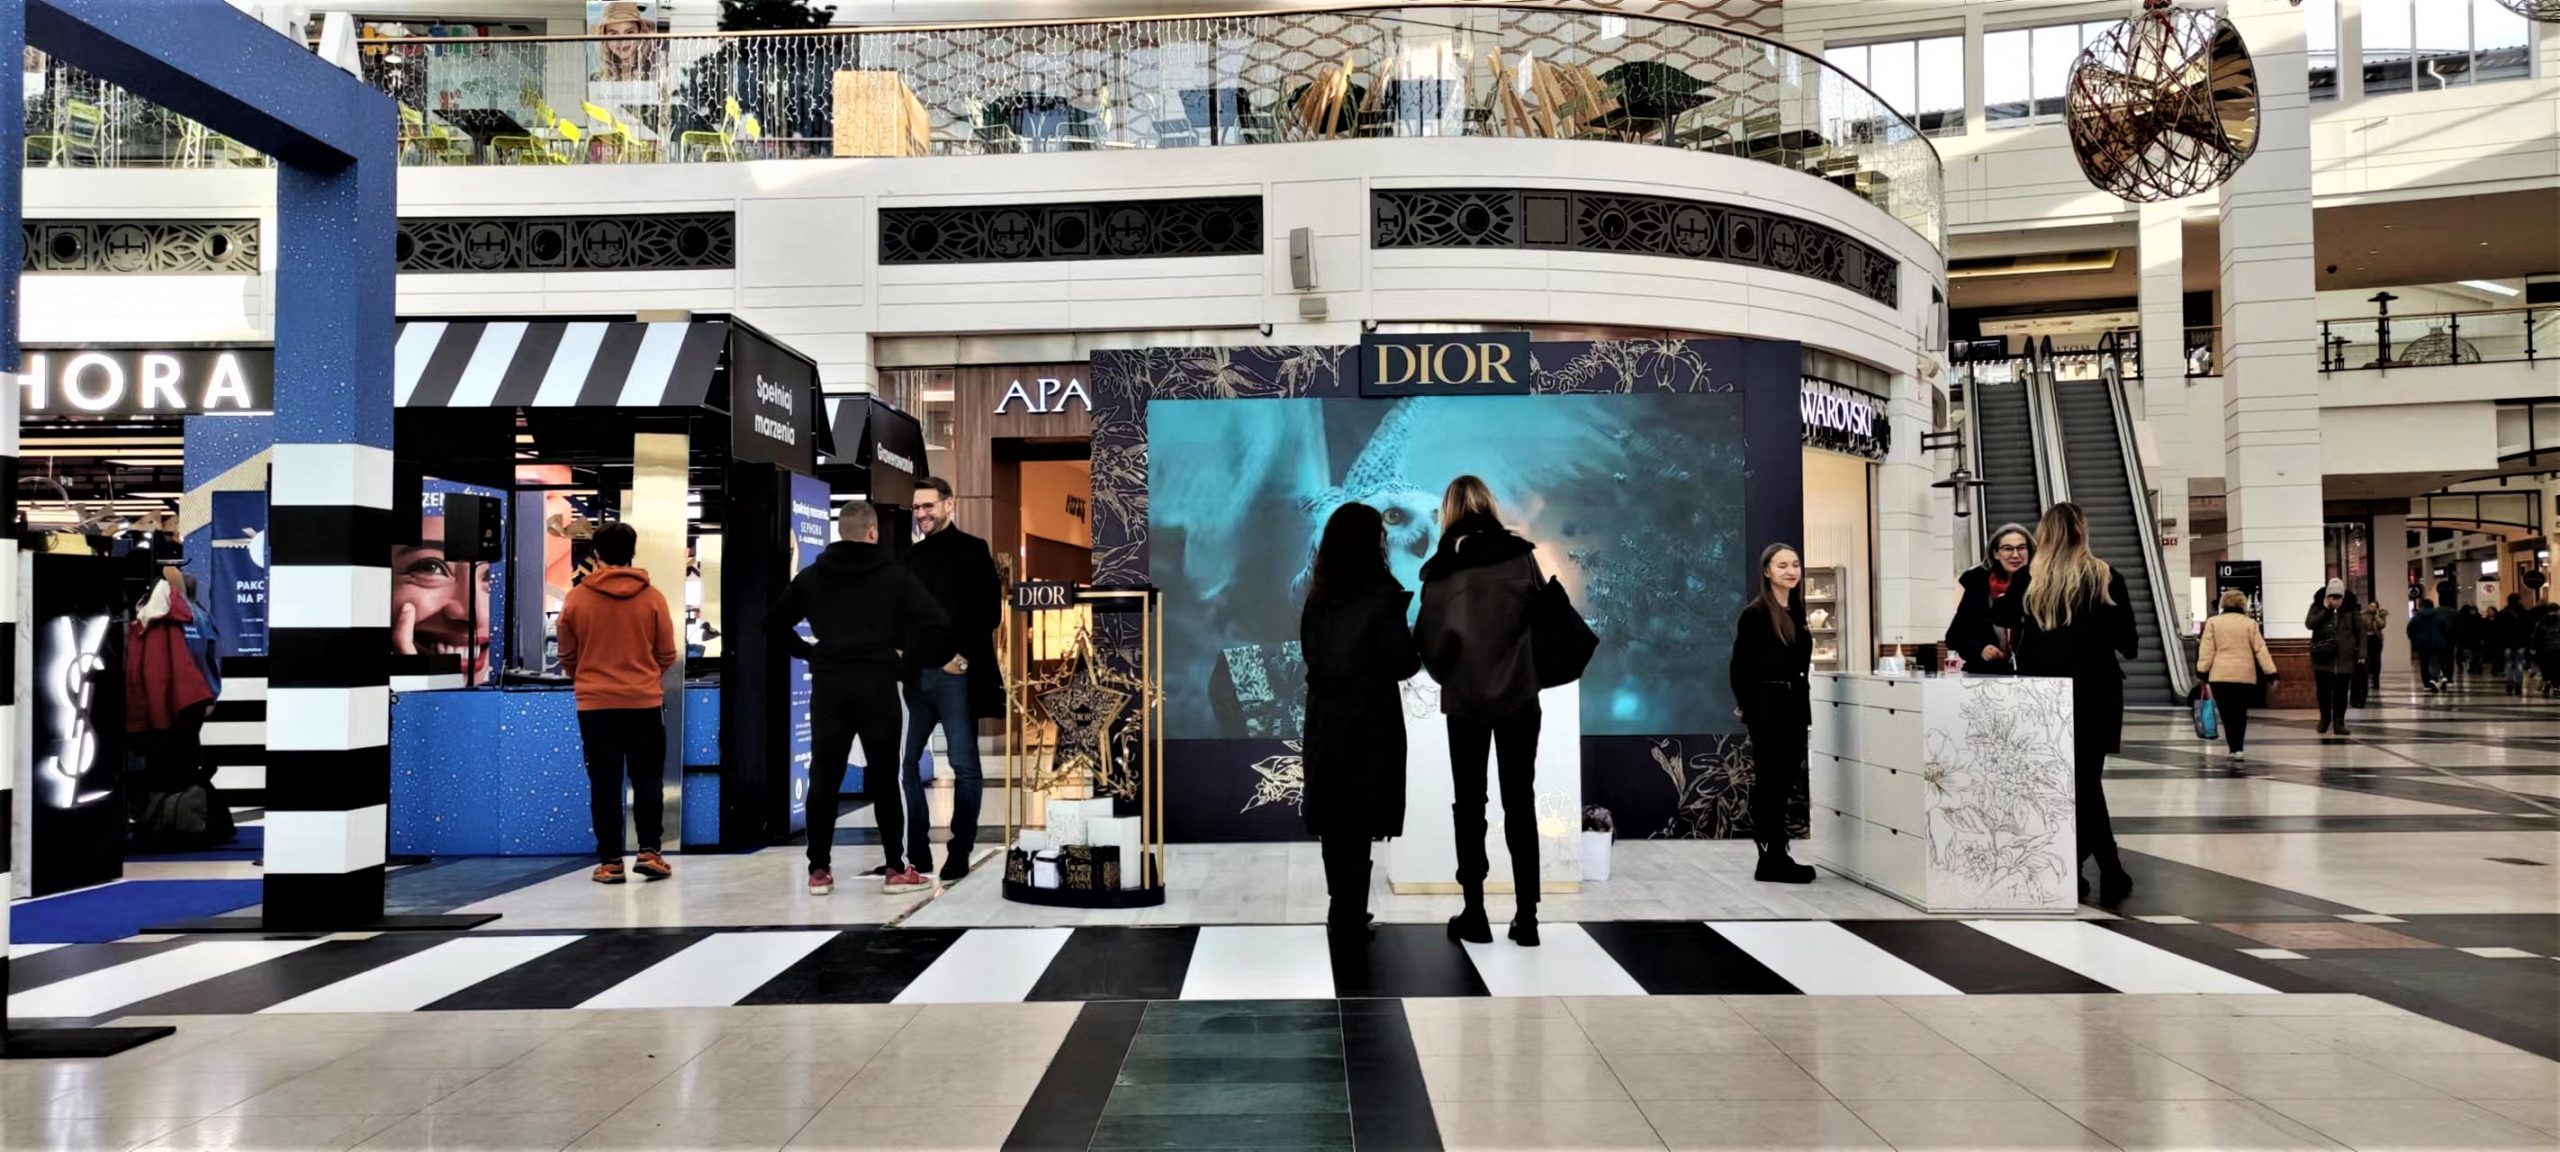 Ekran Ledsee na stoisku Dior w Arkadii